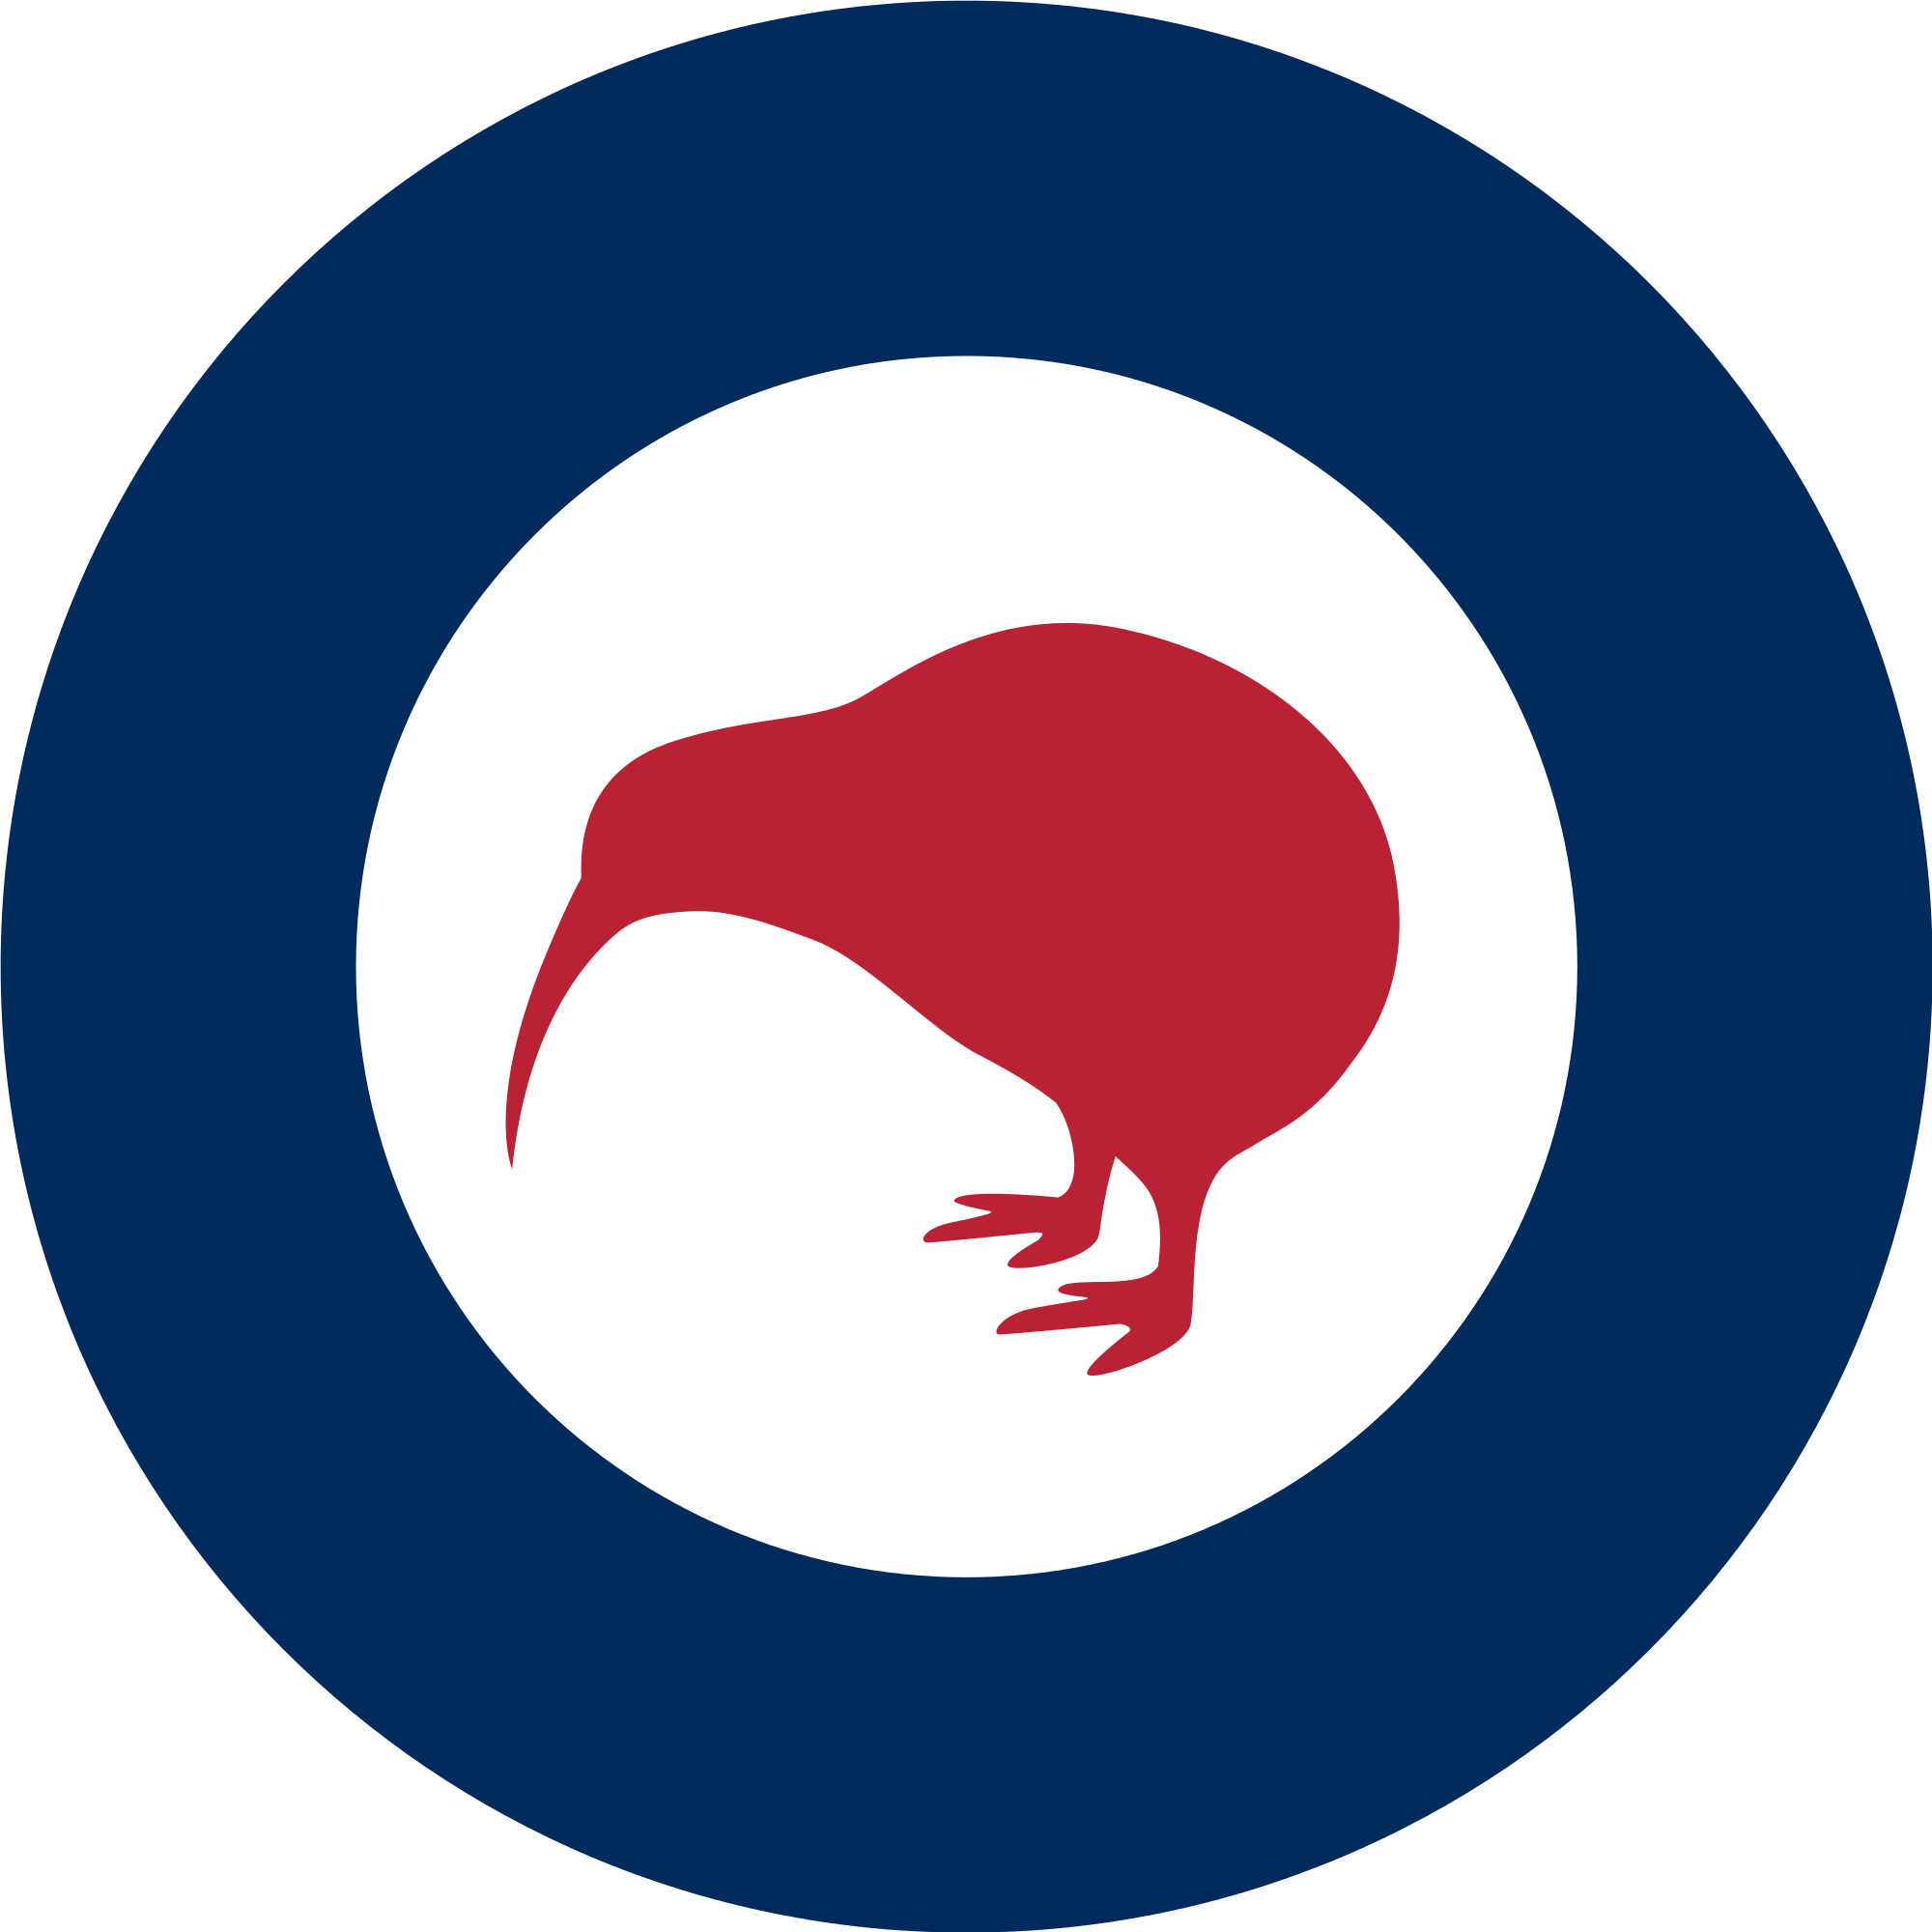 Red and Blue Circle Logo - red kiwi bird image in blue circle Jones & Company Accountants